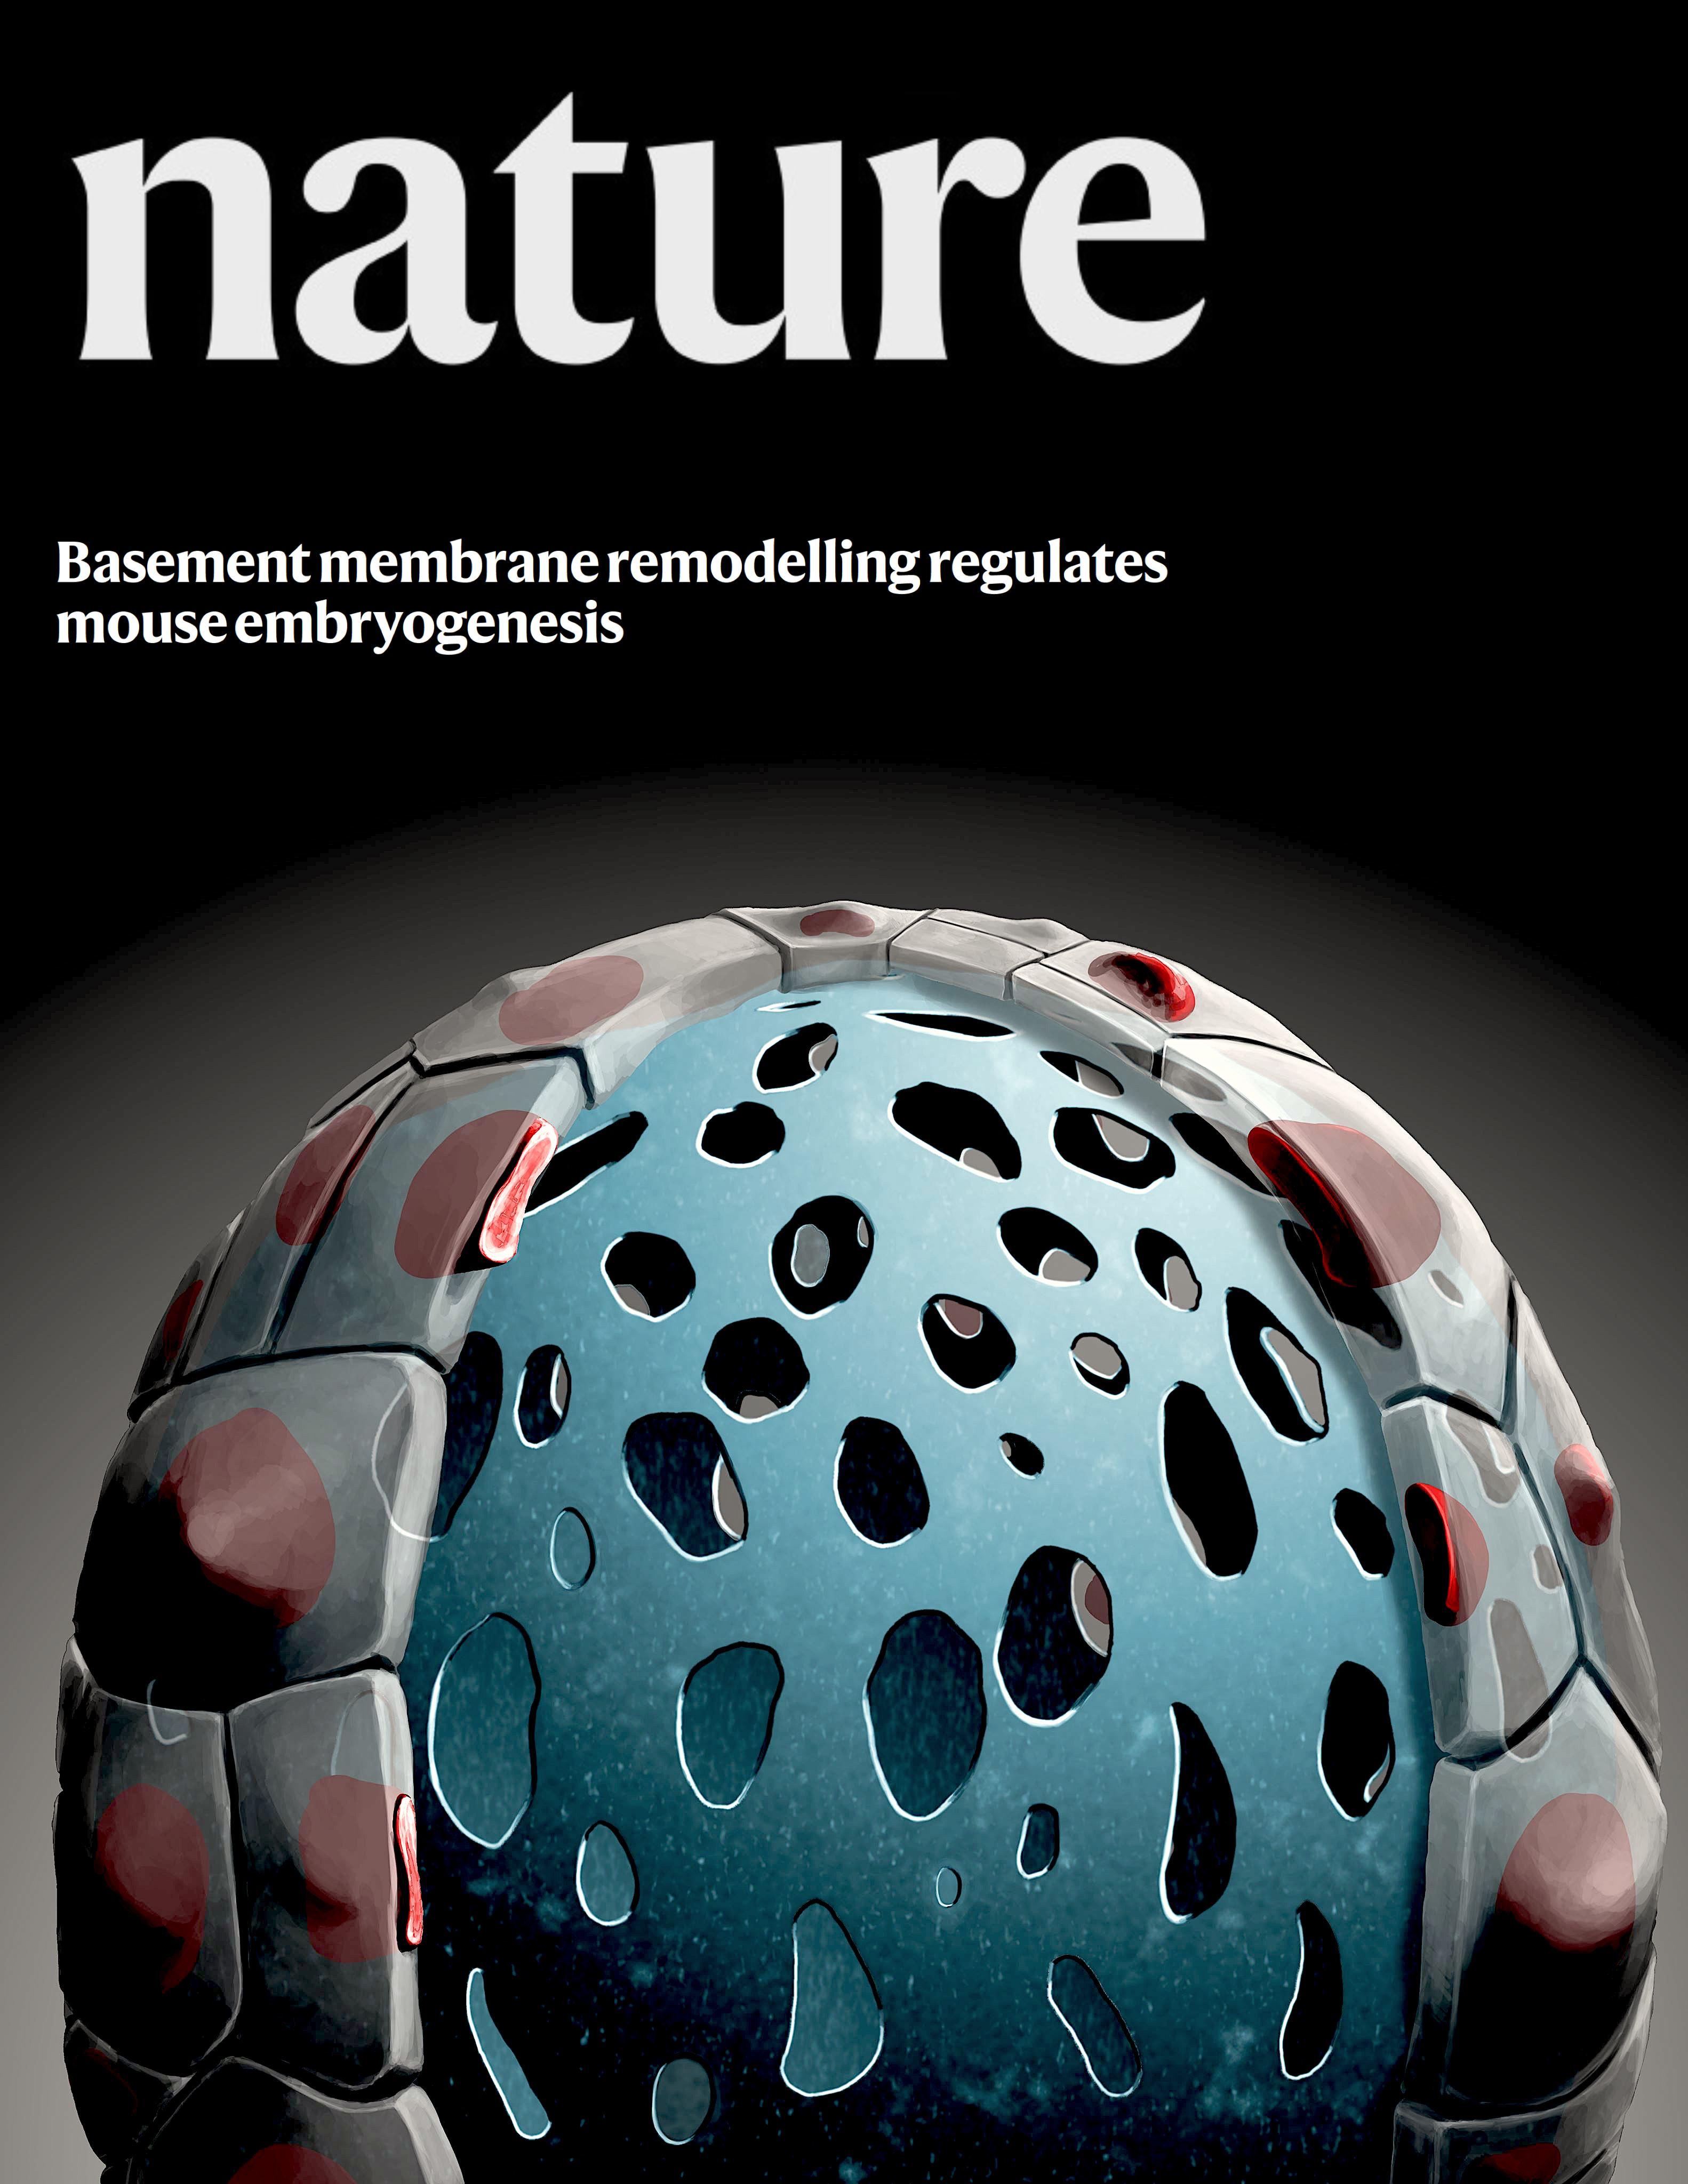 Basement membrane remodelling regulates development